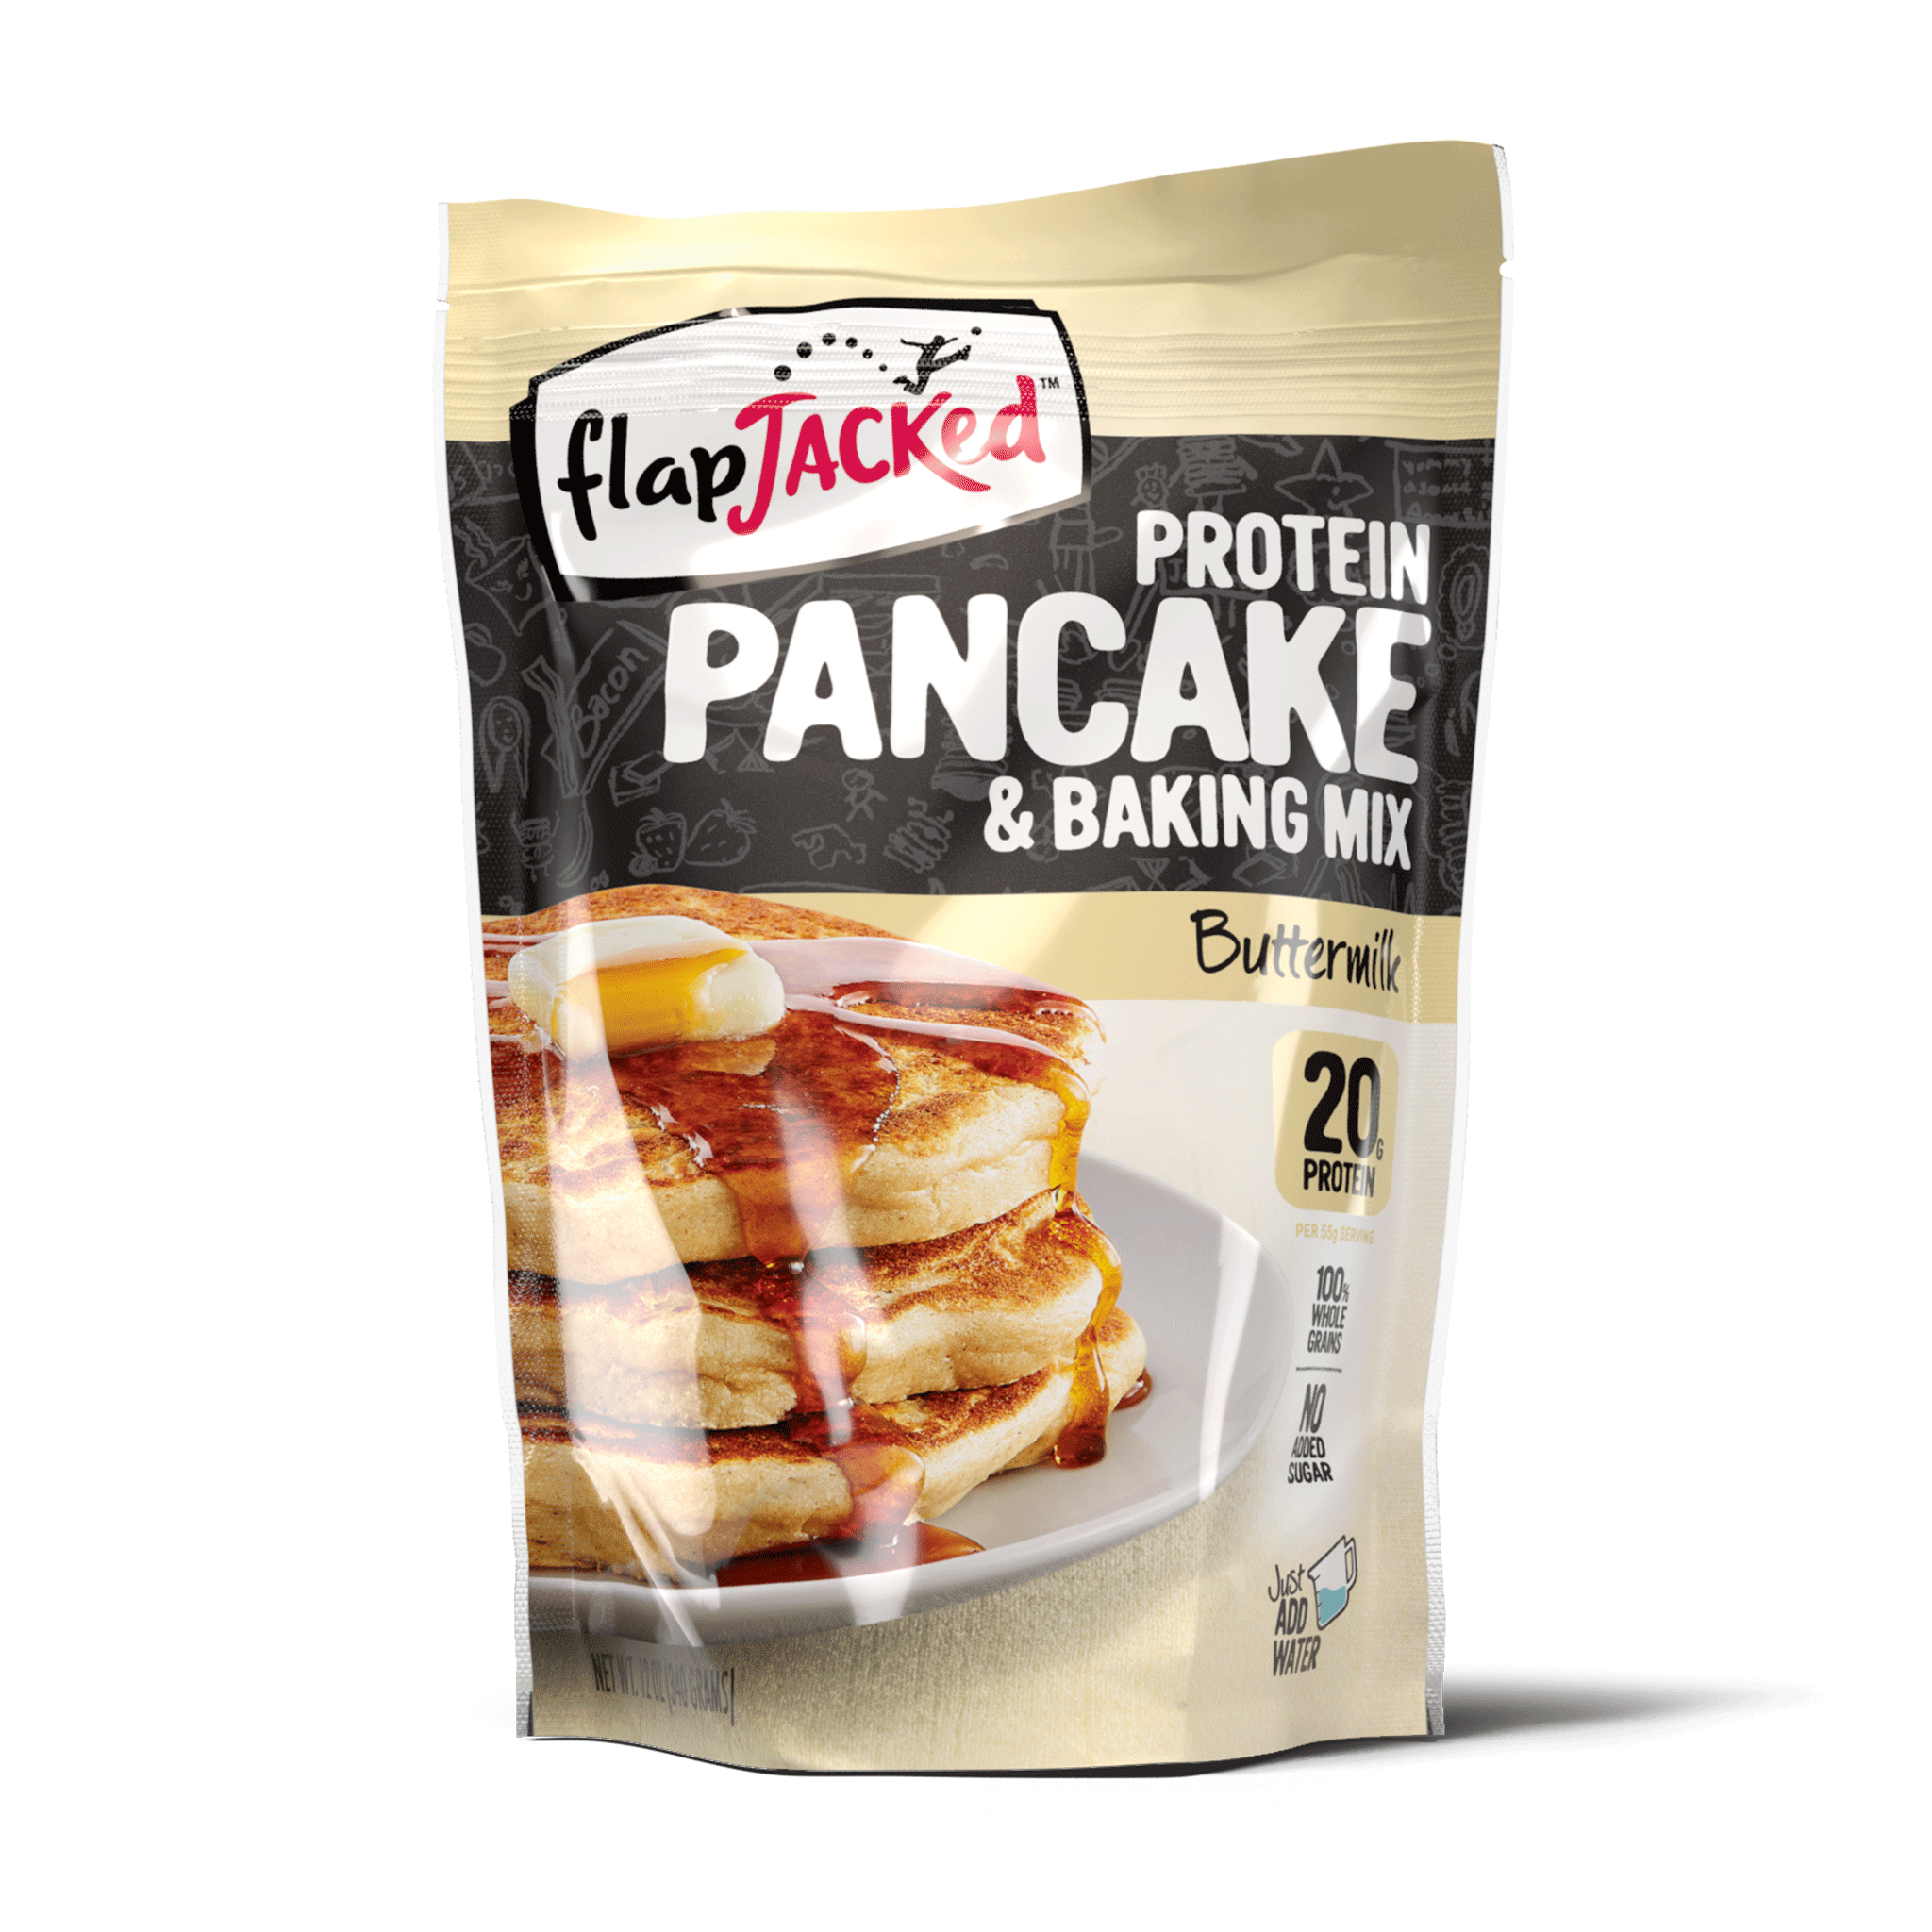 typisk genert Se tilbage FlapJacked Buttermilk Protein Pancake & Baking Mix